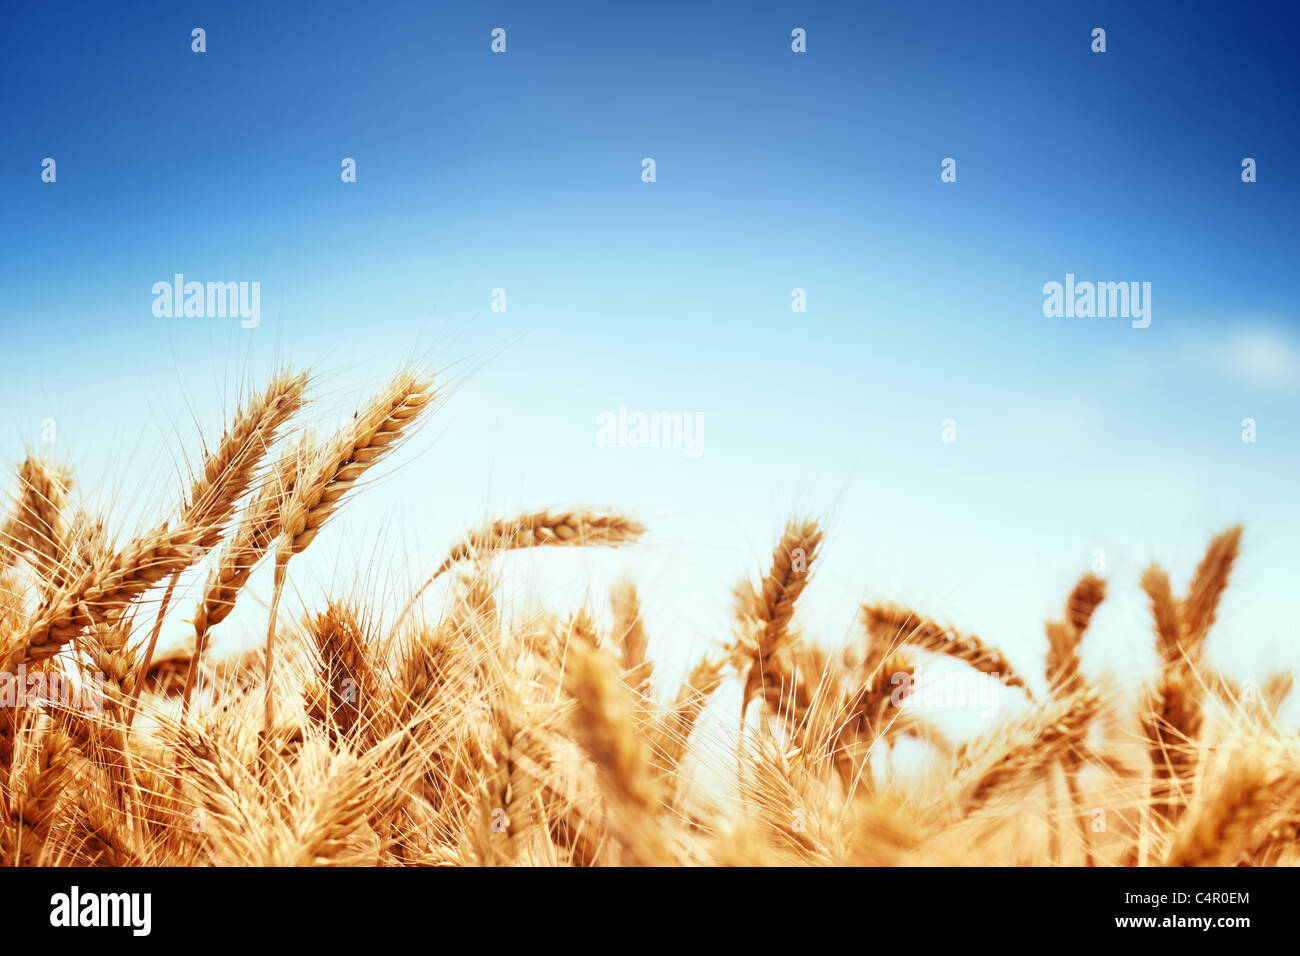 Wheat field against a blue sky Stock Photo